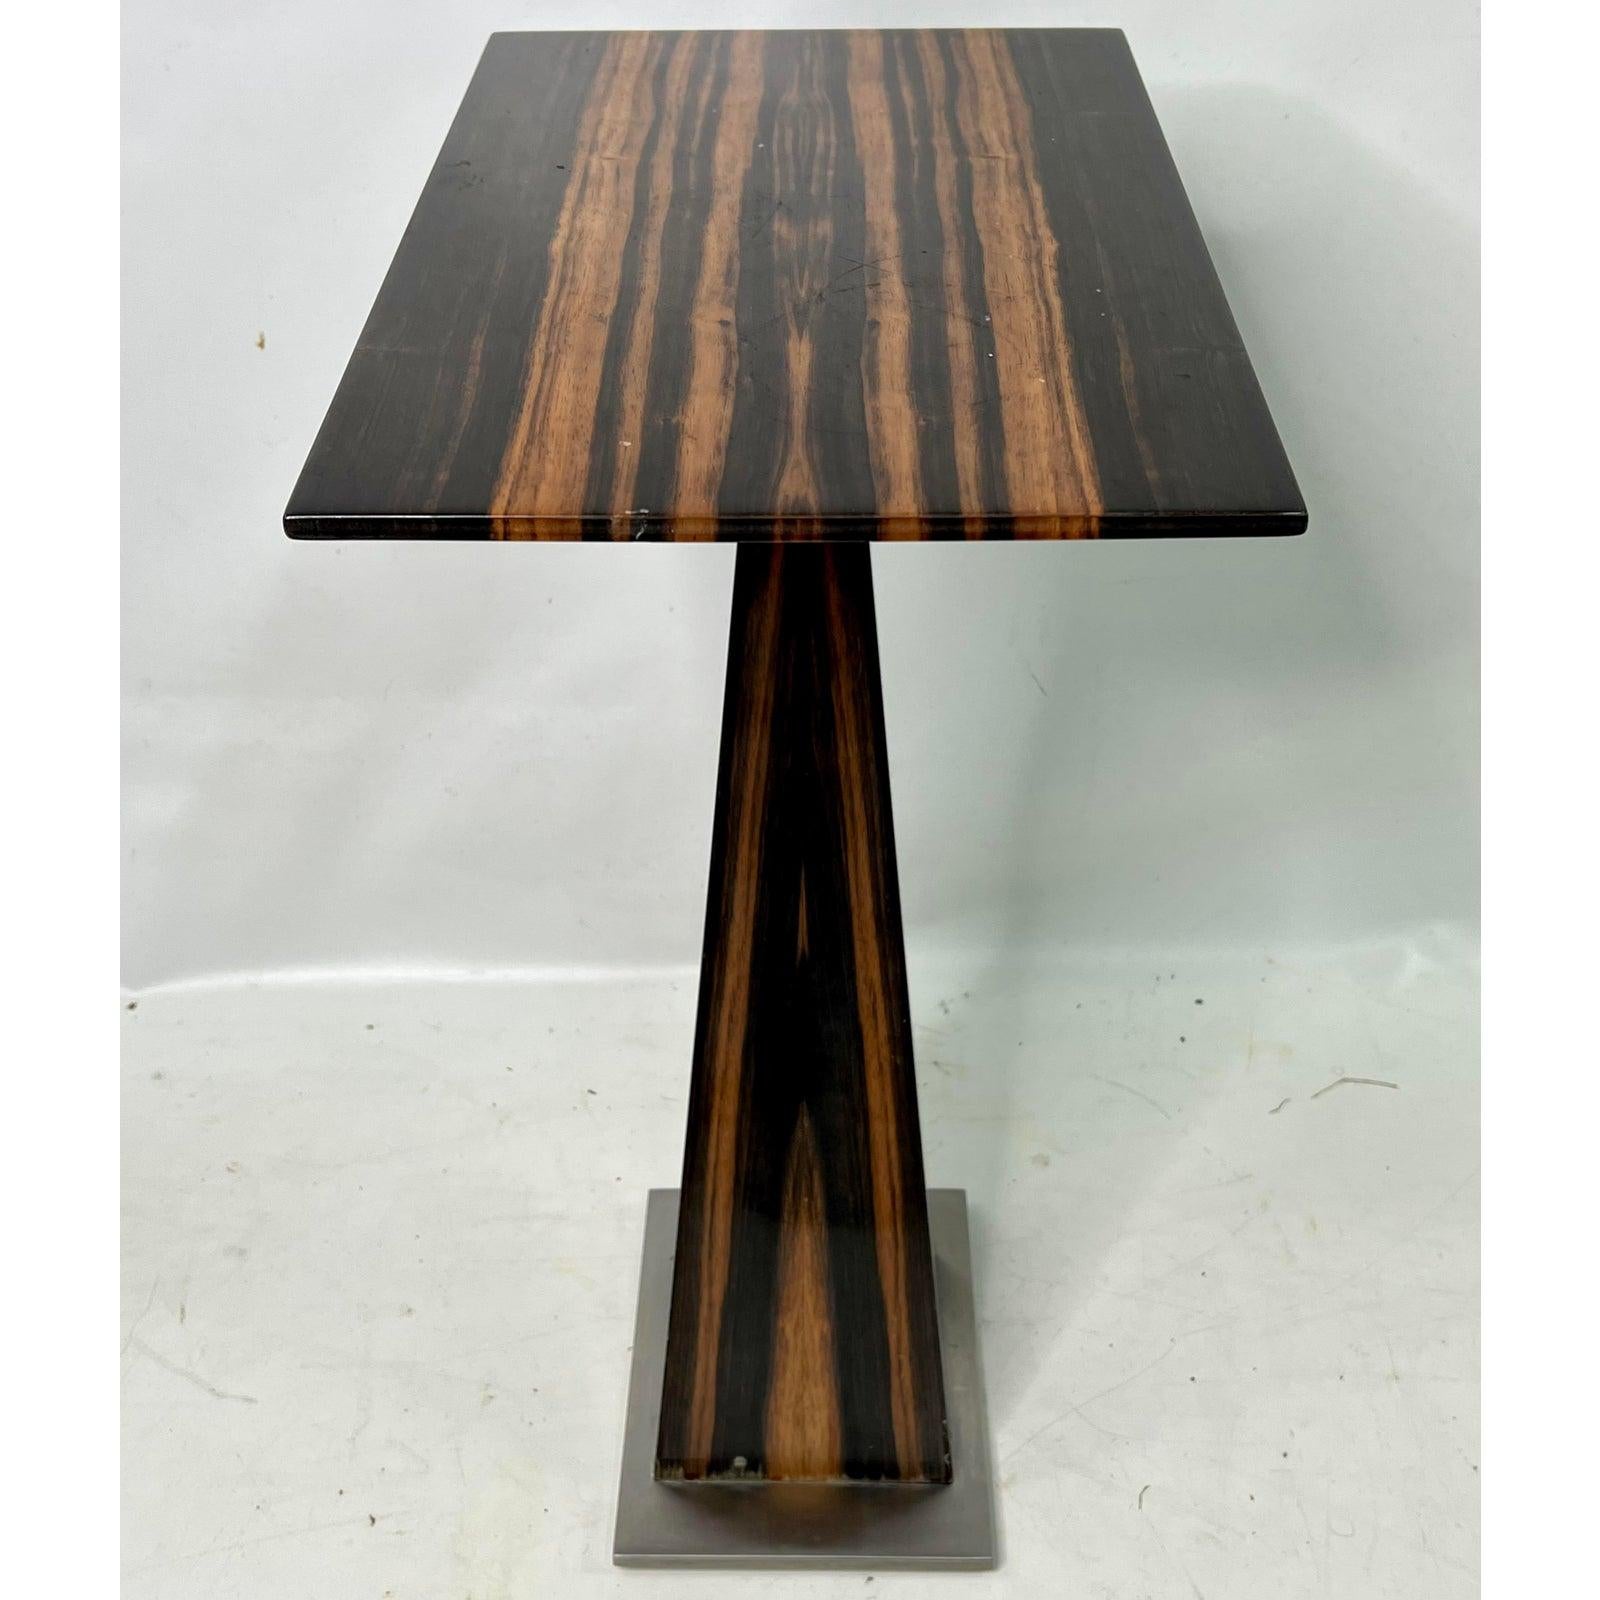 Marbello Design Mid-Century Modern style Zebra wood side table.